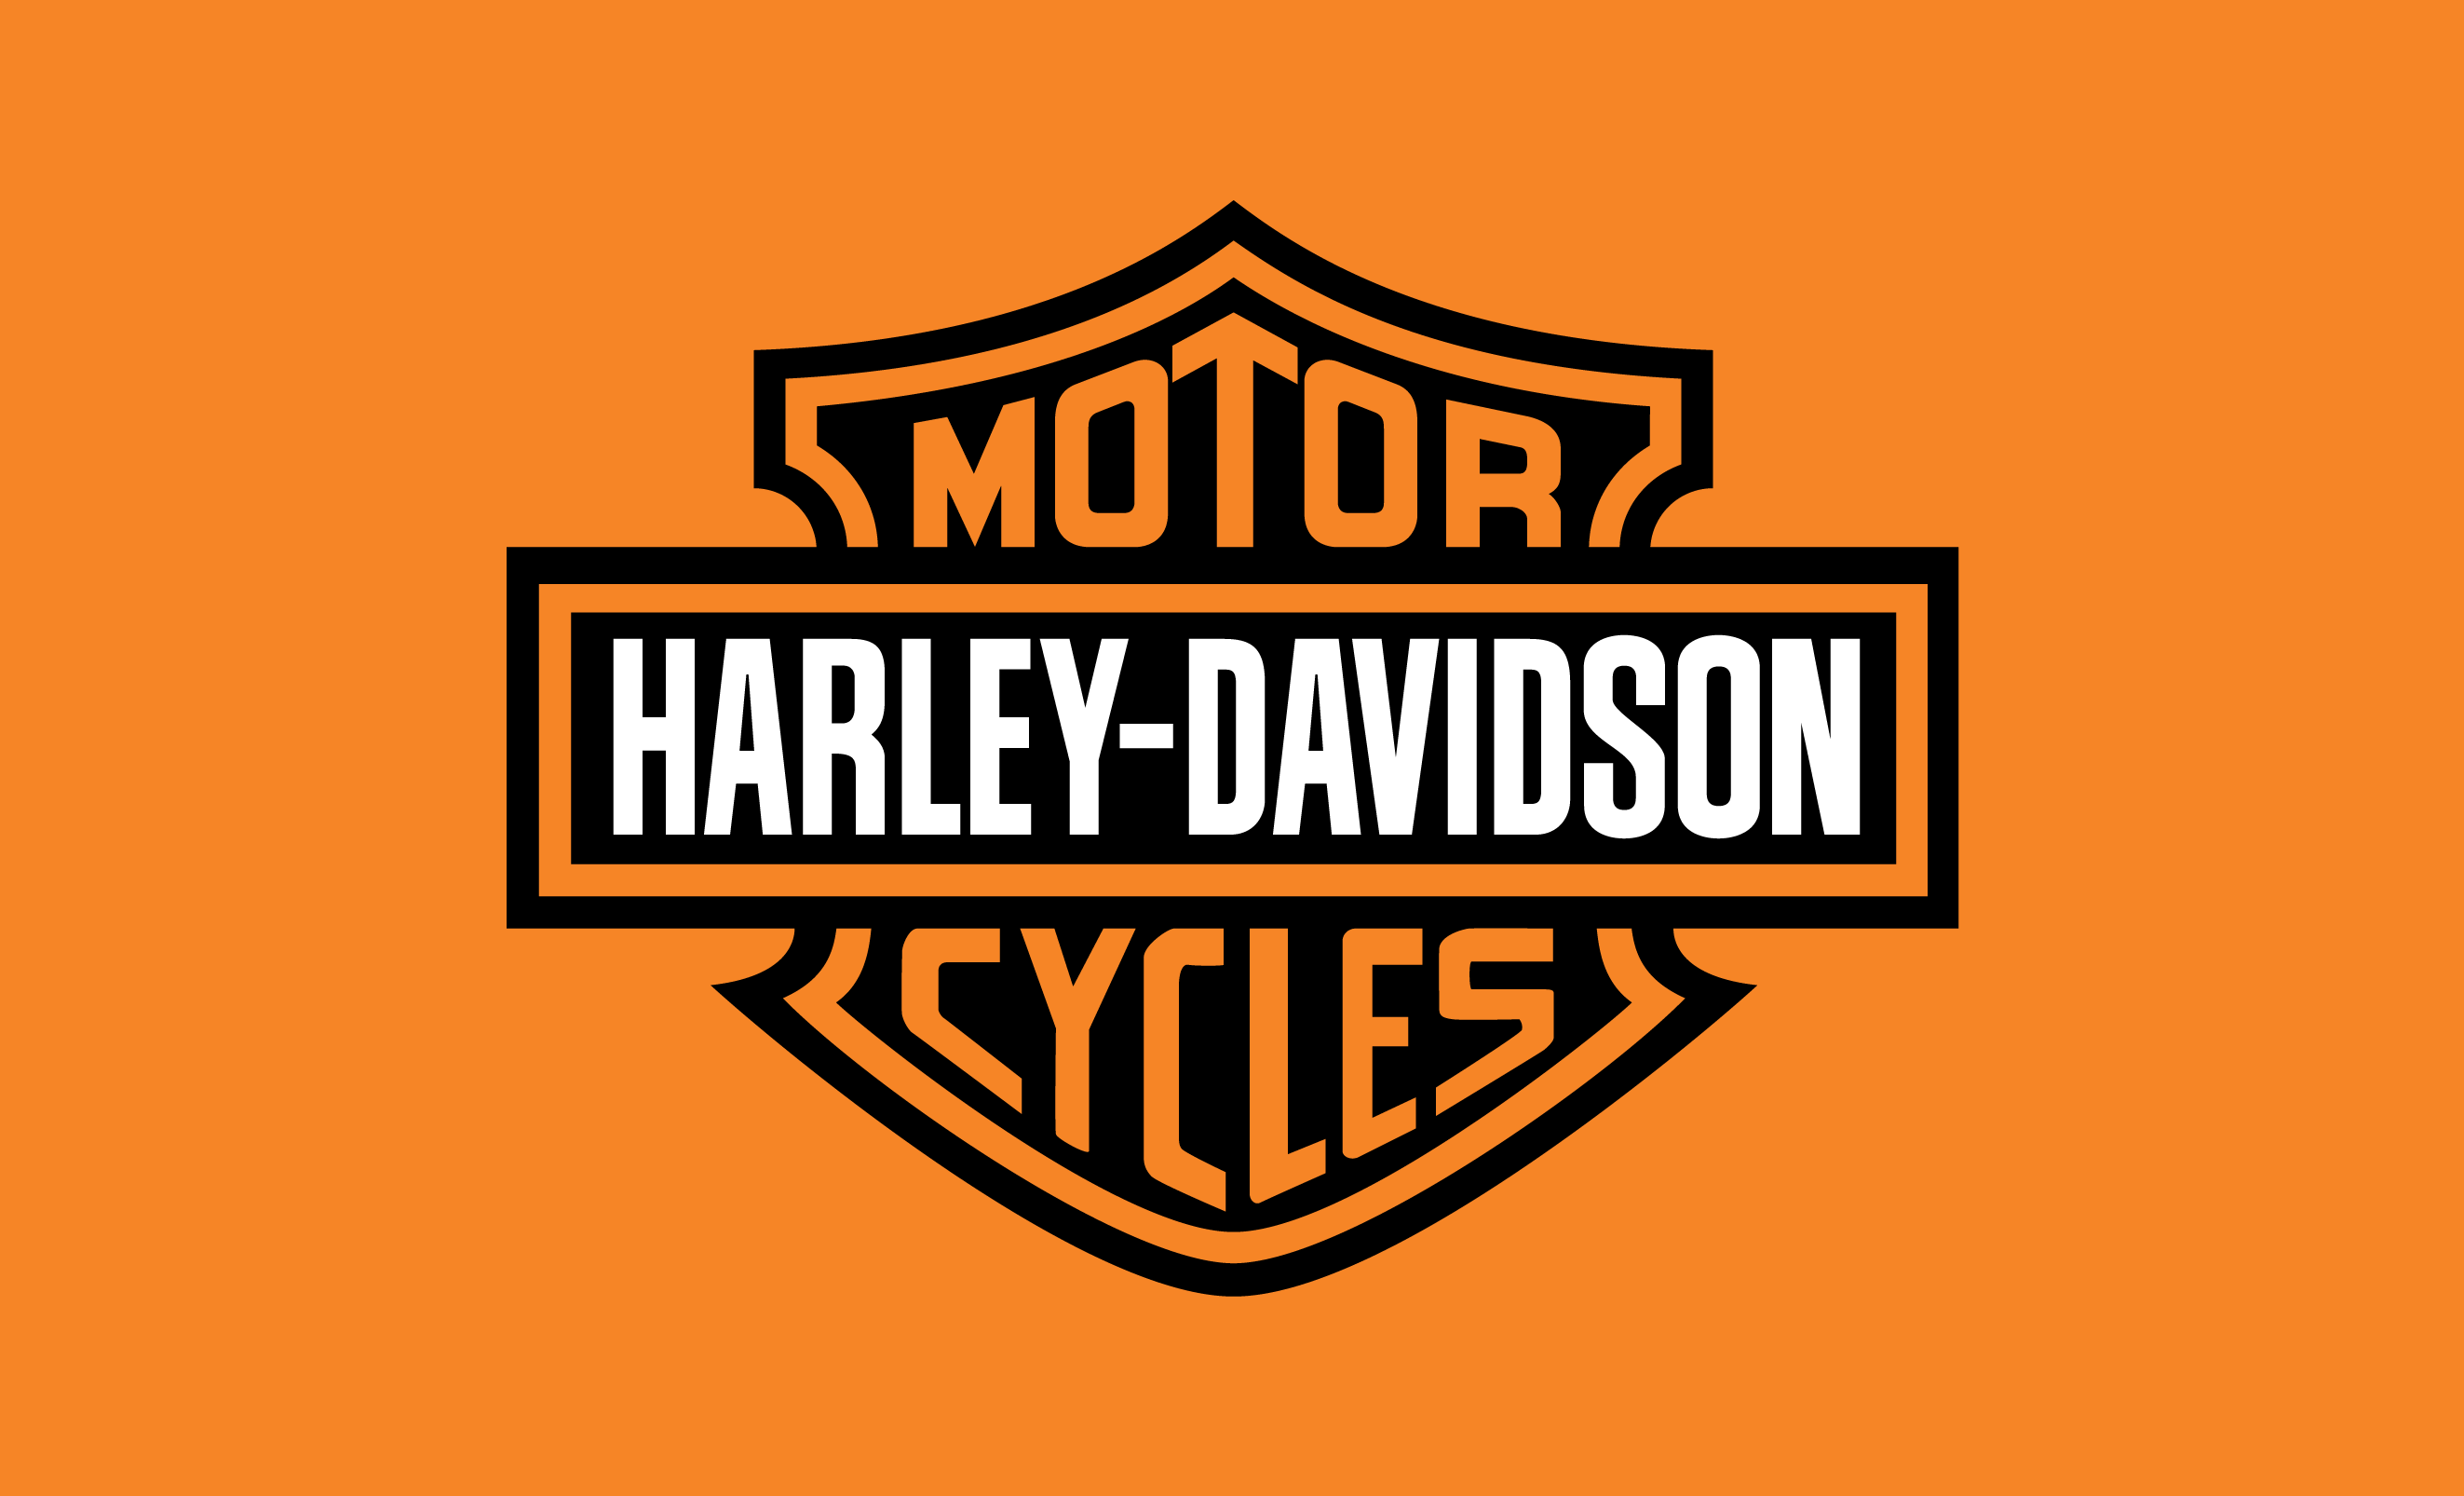 Harley Davidson Football Logo - Mike Giusti - Harley-Davidson Logo Re-Creation & Branding